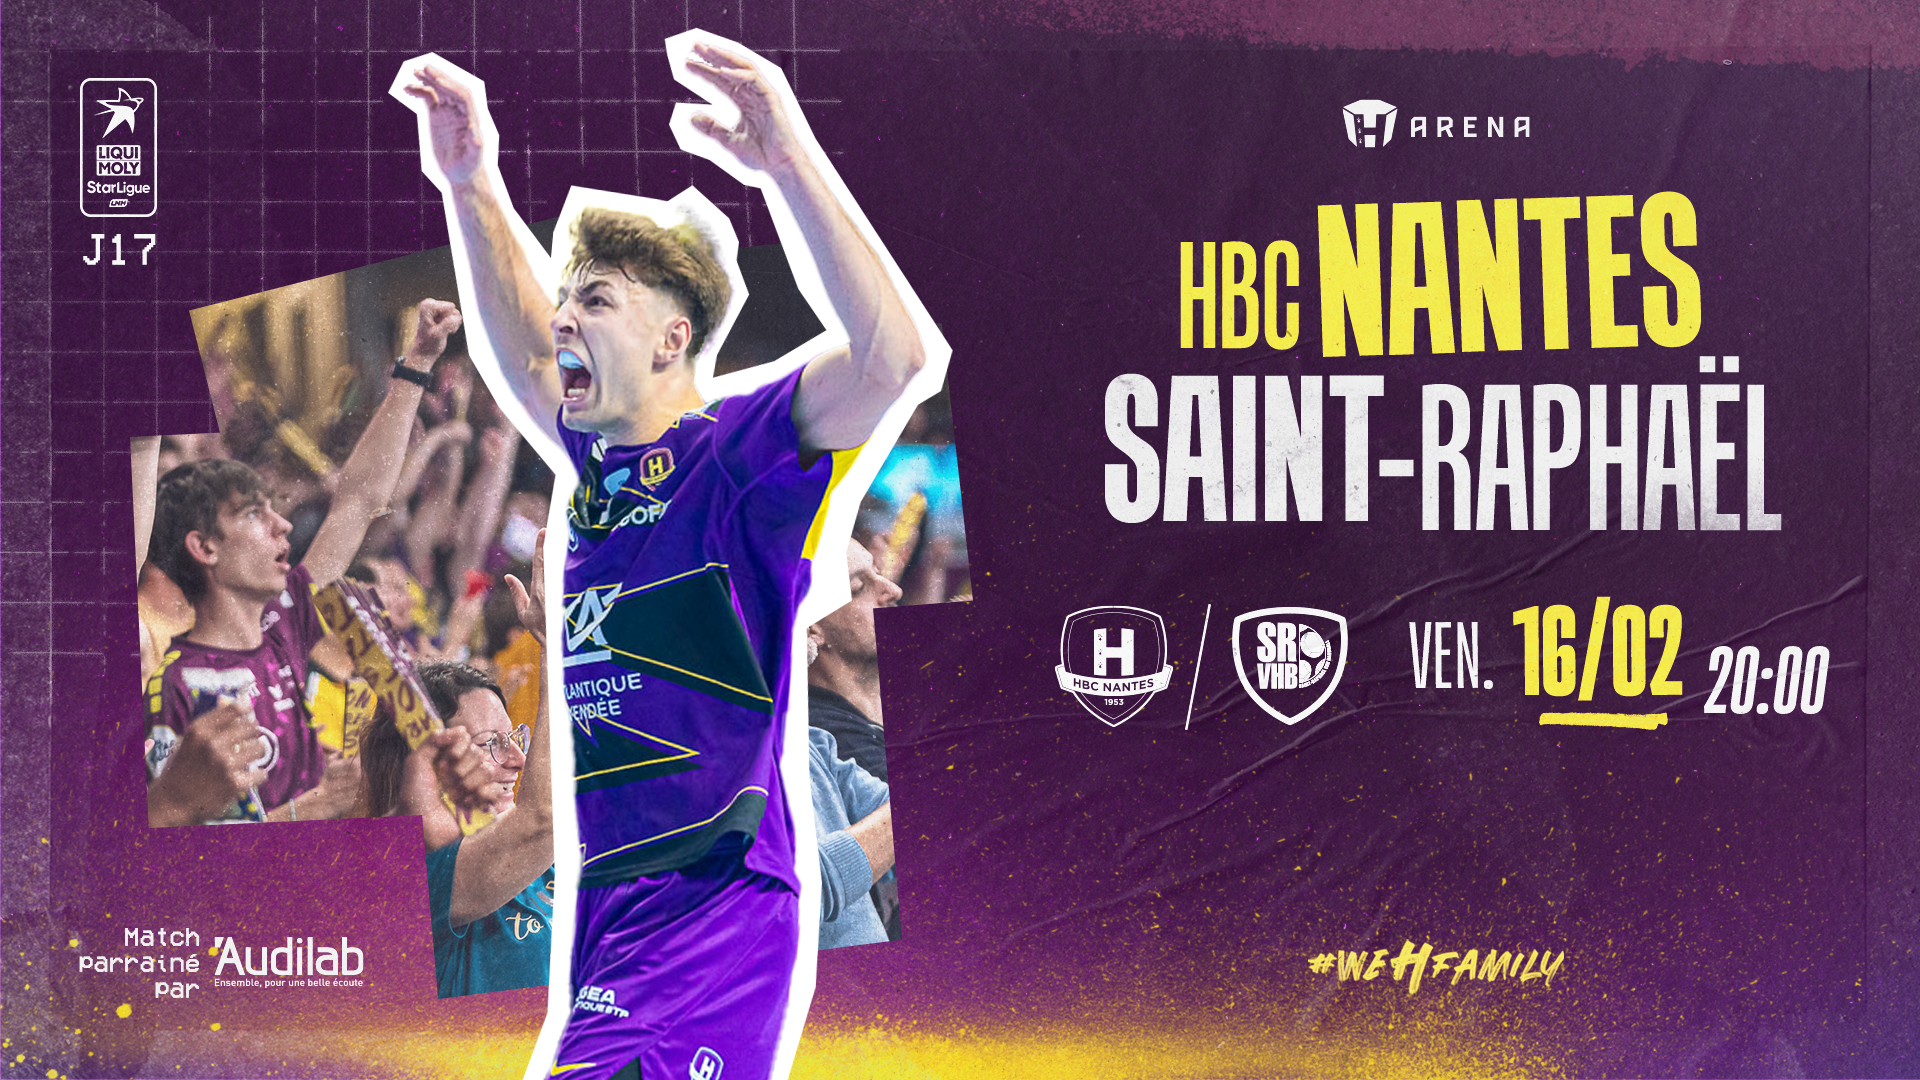 HBC Nantes - Saint-Raphaël : Programme de match